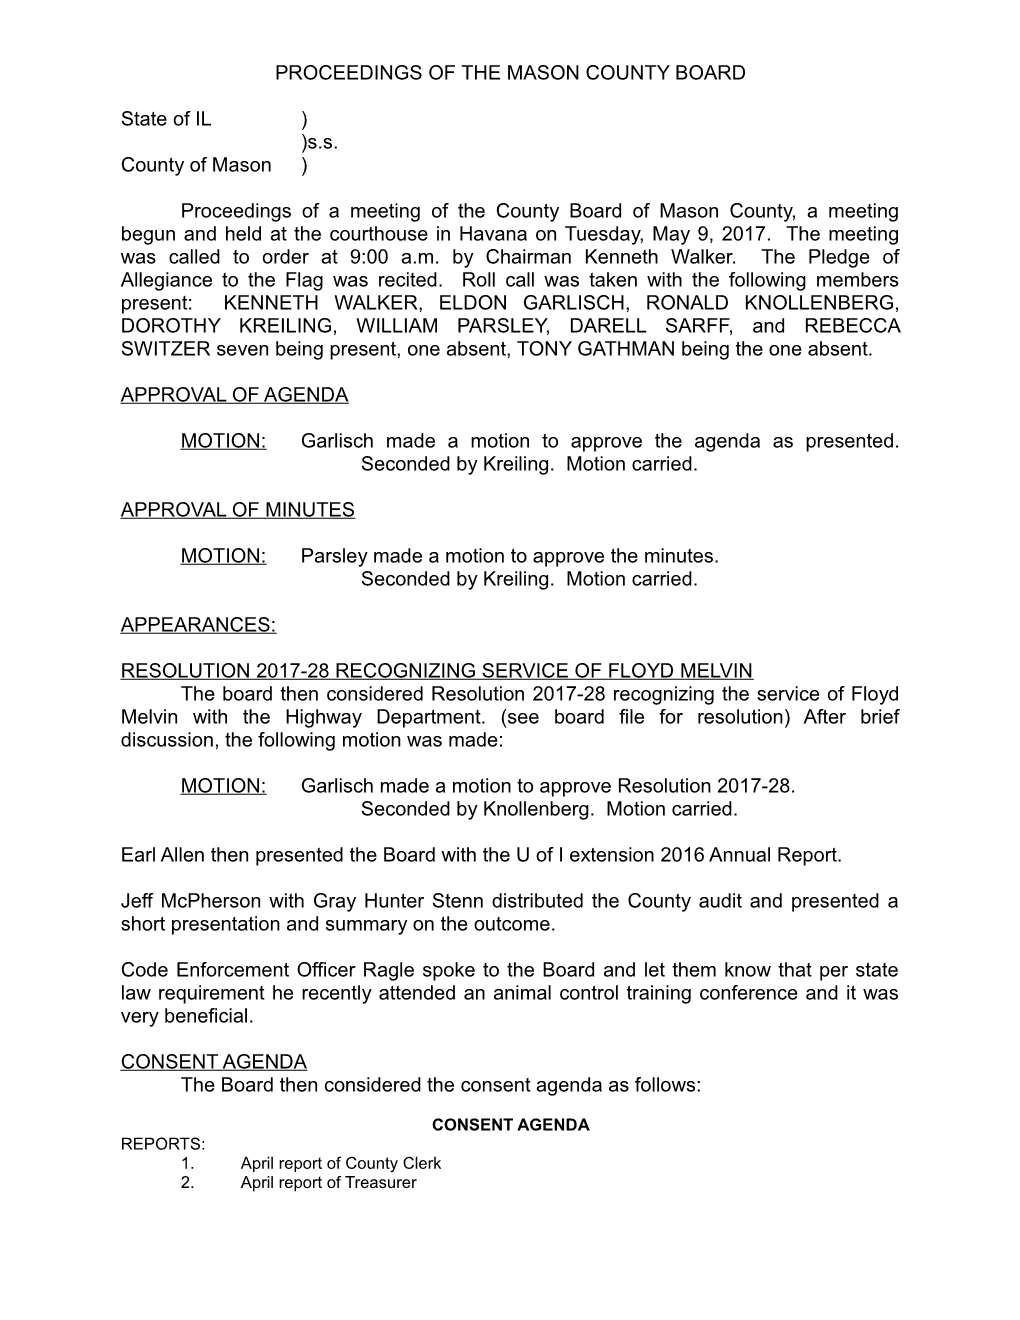 Proceedings of the Mason County Board